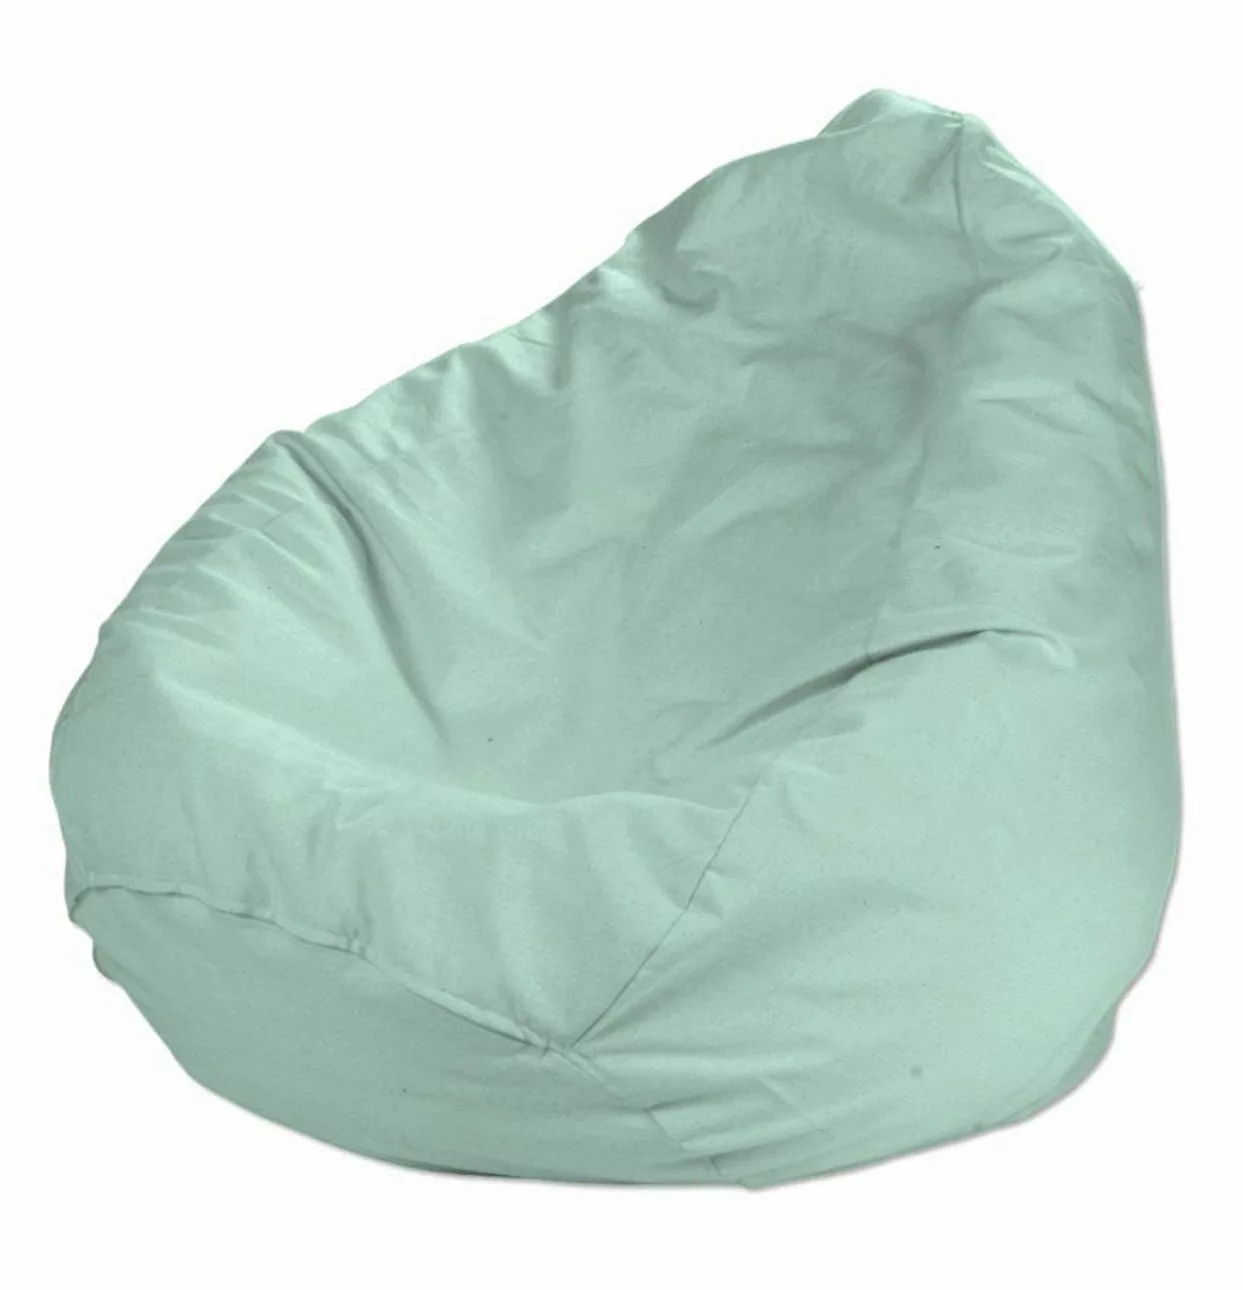 Bezug für Sitzsack, mintgrün, Bezug für Sitzsack Ø80 x 115 cm, Loneta (133- günstig online kaufen